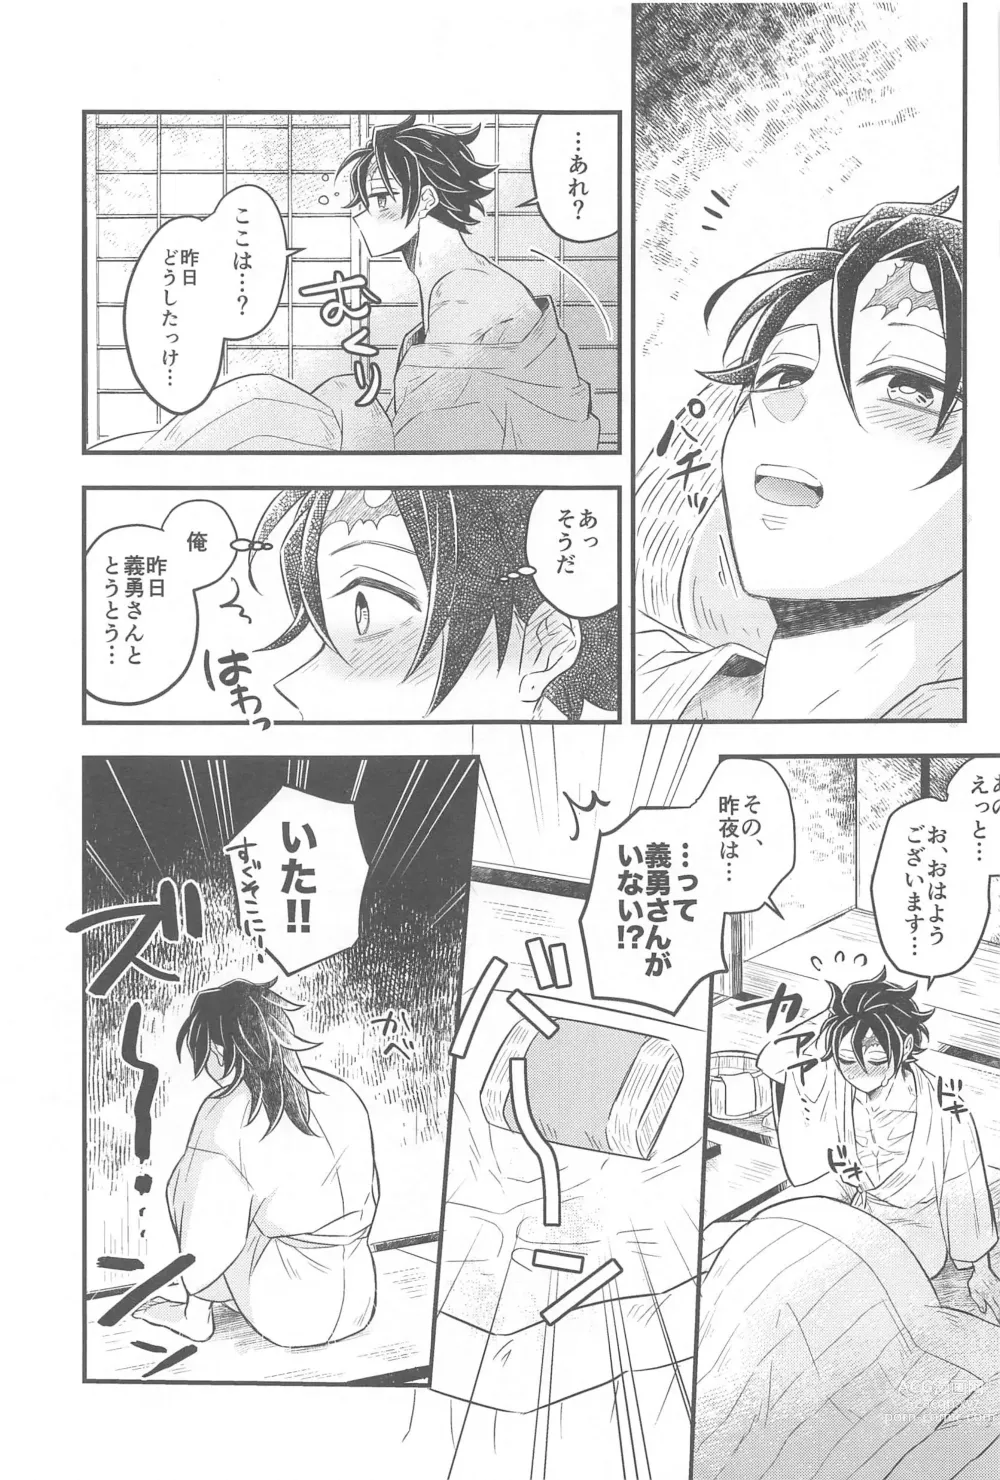 Page 16 of doujinshi Shoya no Yokuasa - the morning after the first night